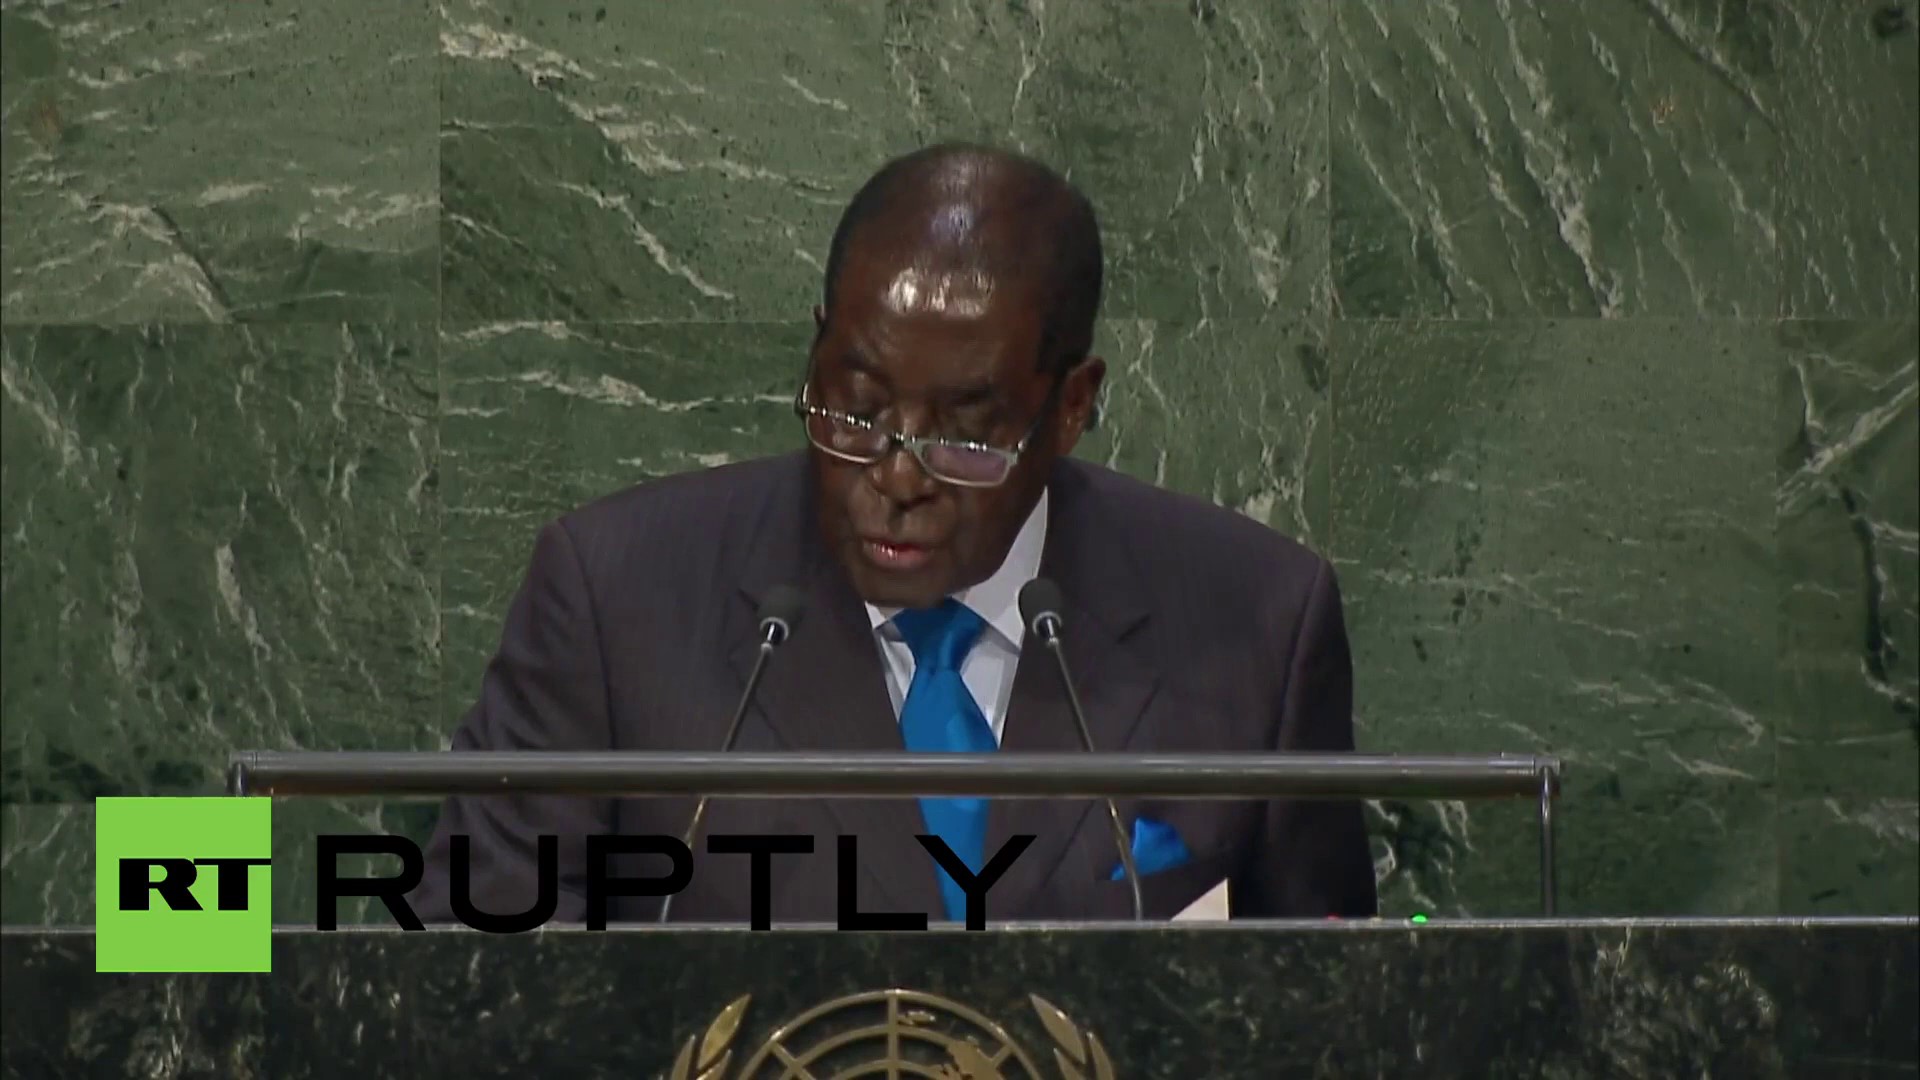 We are not gays declares Robert Mugabe